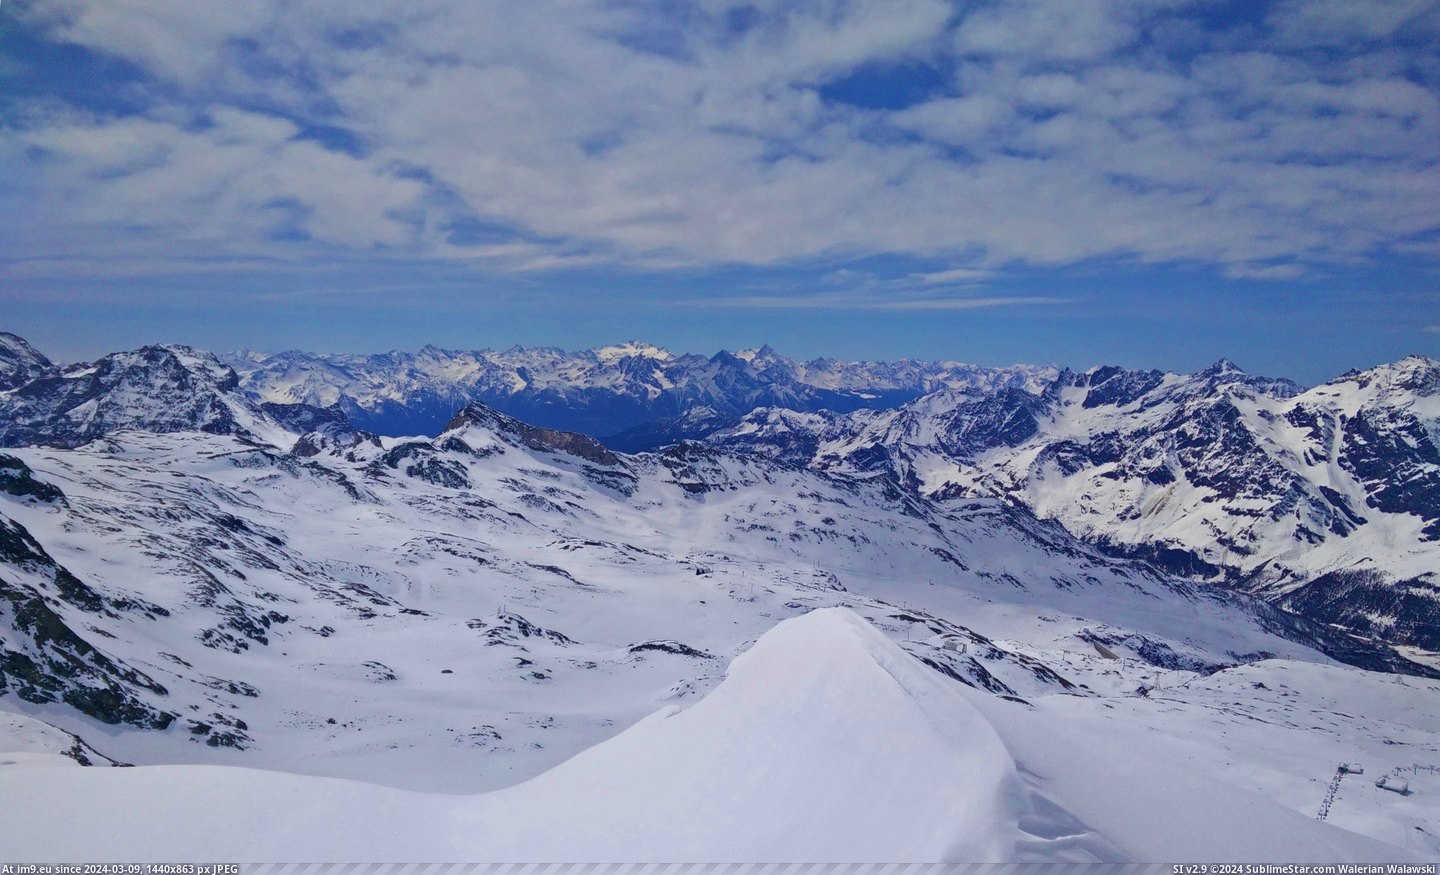 #Italian #Switzerland #Unedited #Alps #Matterhorn [Earthporn] Italian Alps, as seen from the Matterhorn, Switzerland. Unedited.  (4048x2440) Pic. (Изображение из альбом My r/EARTHPORN favs))